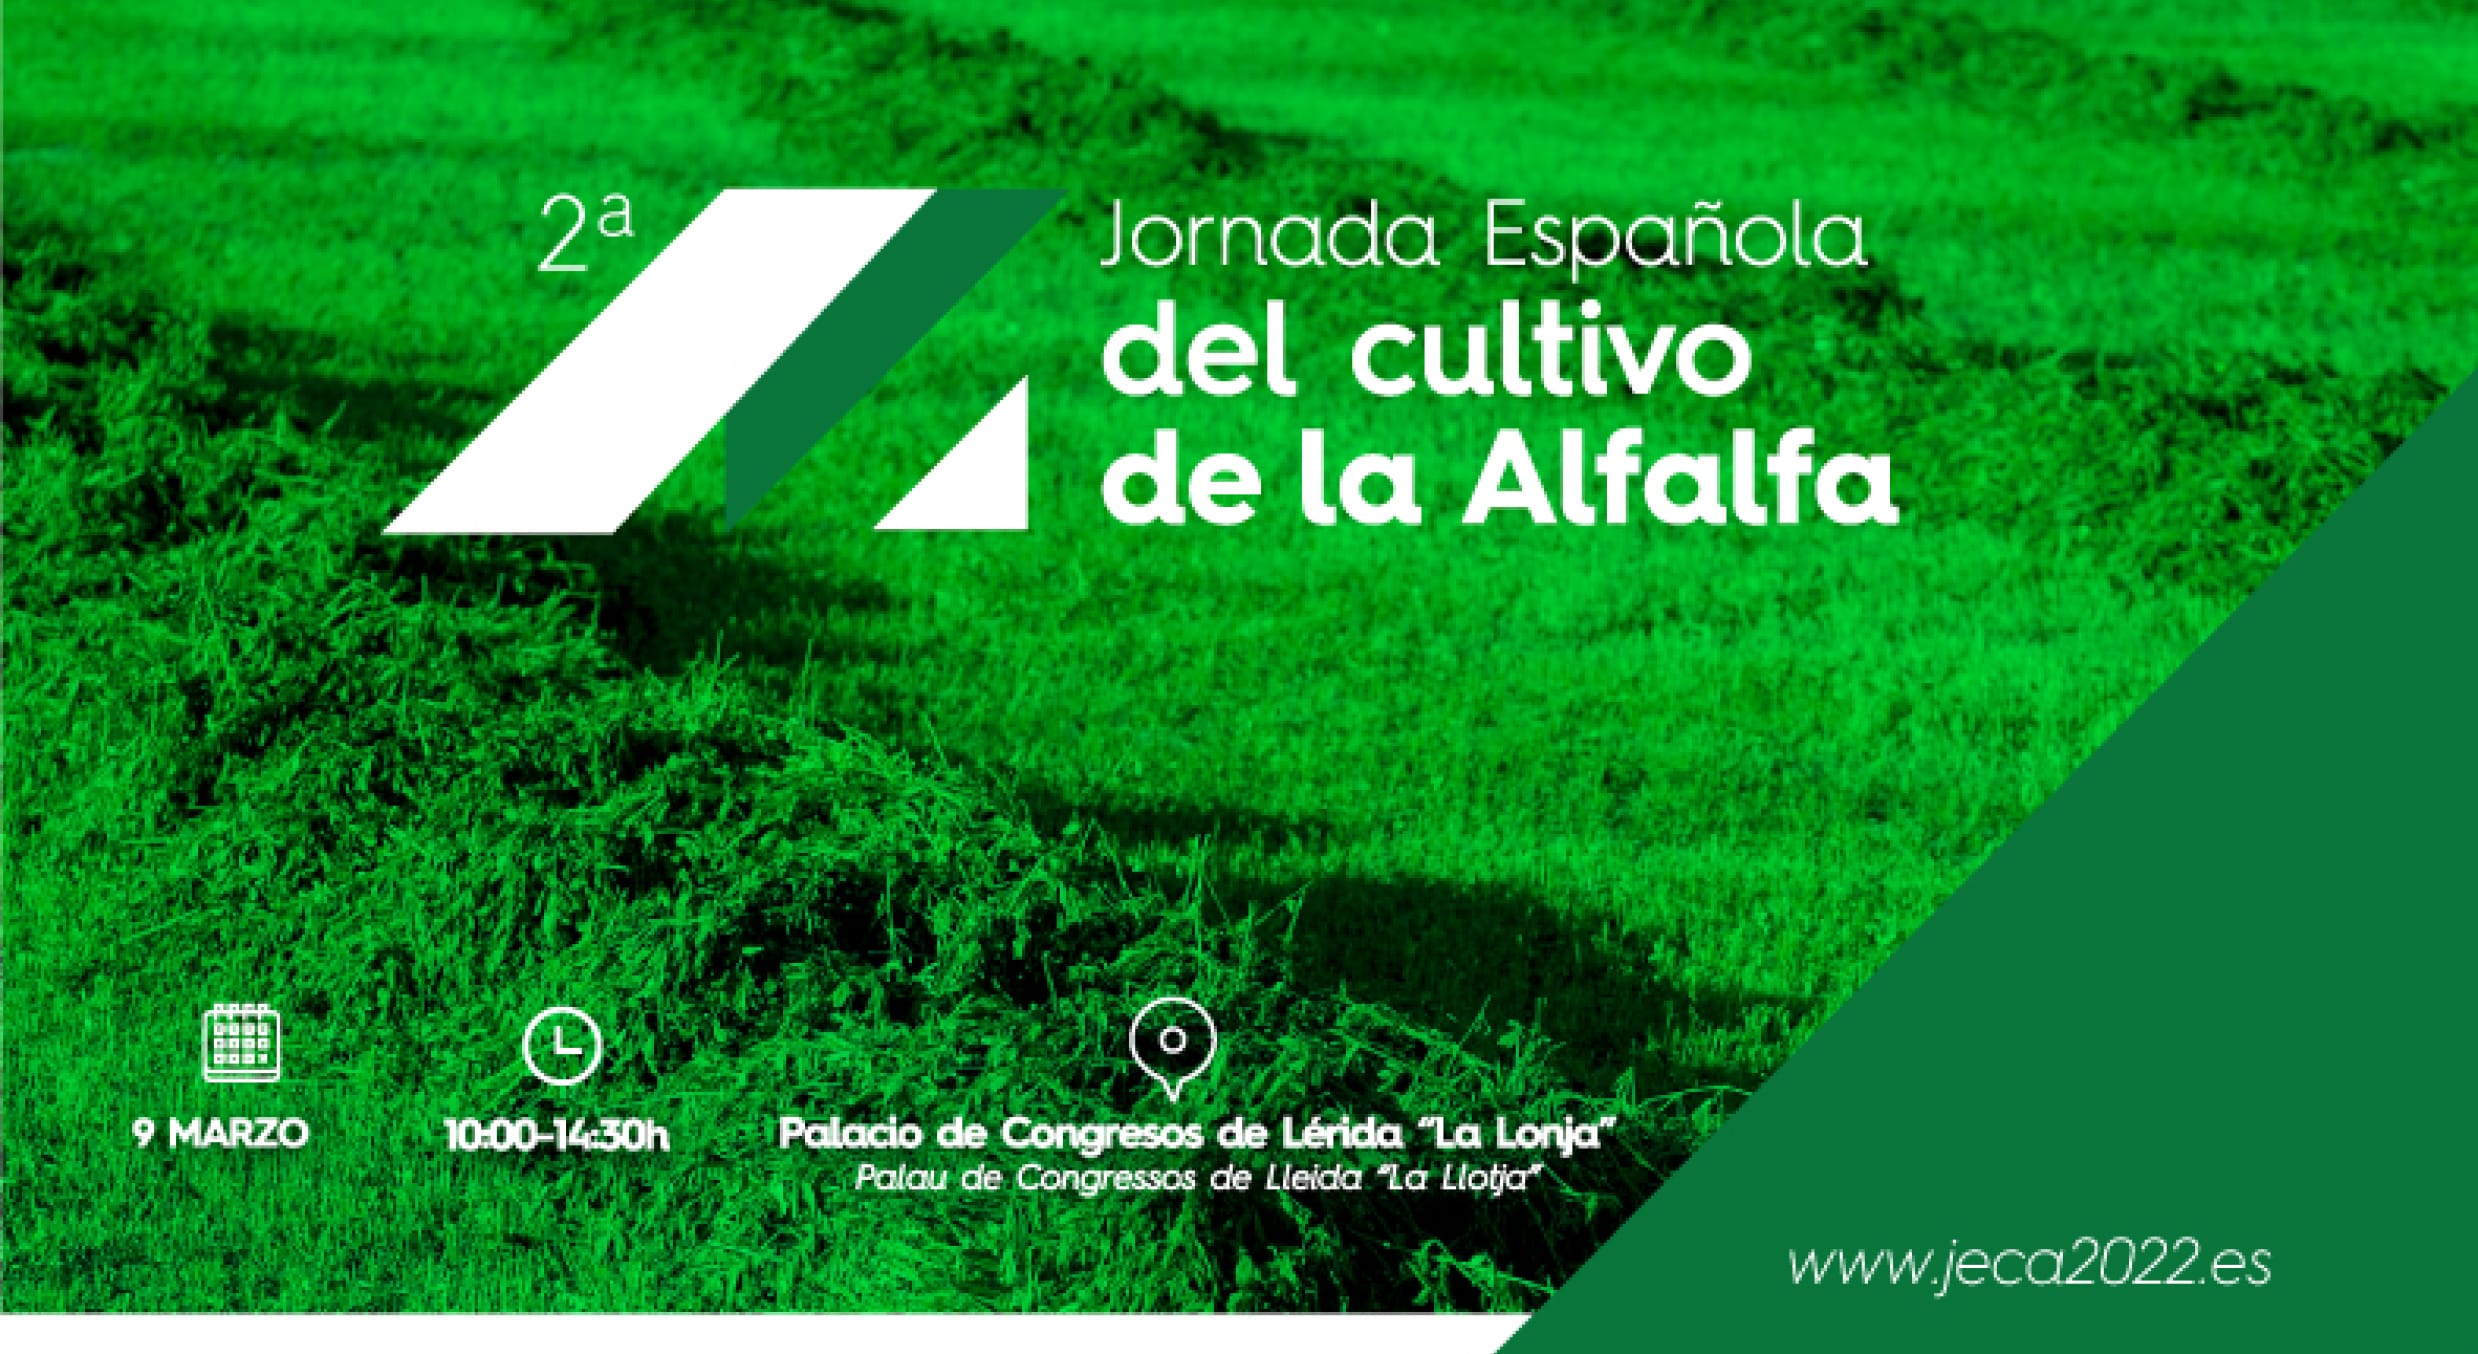 ornada Española del Cultivo de la Alfalfa 2022